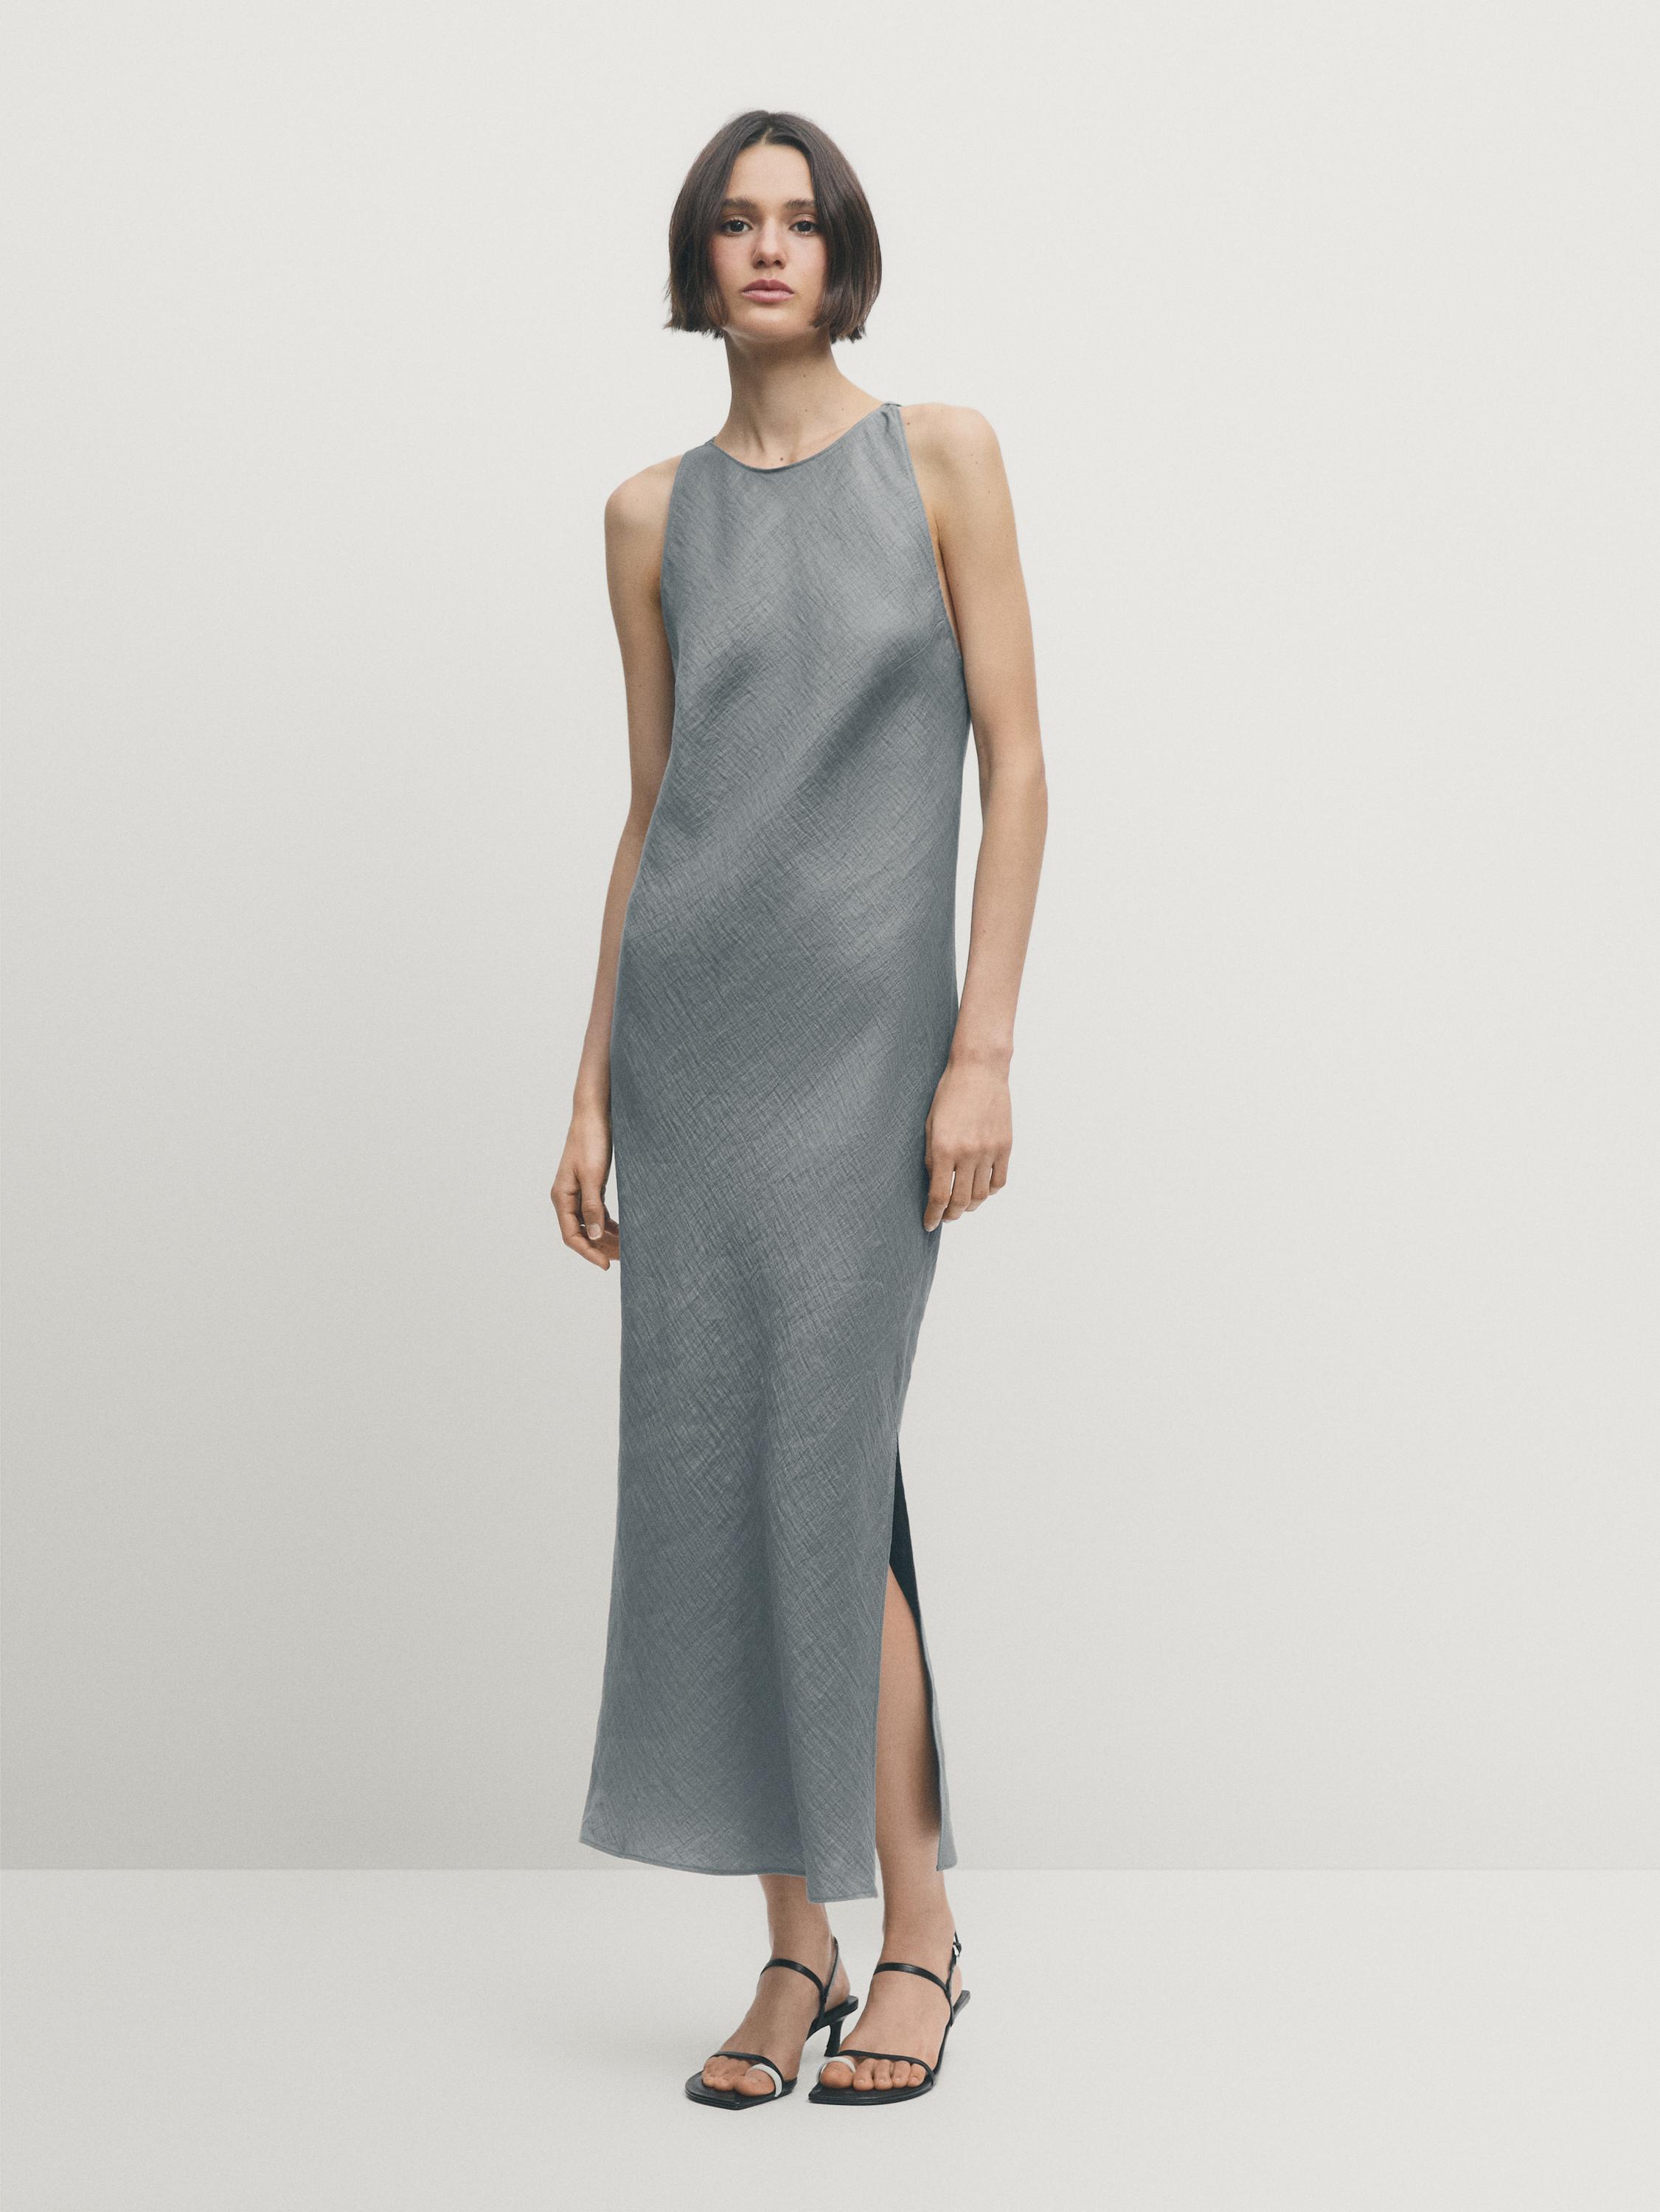 Halter neck dress - Blue gray | ZARA United States